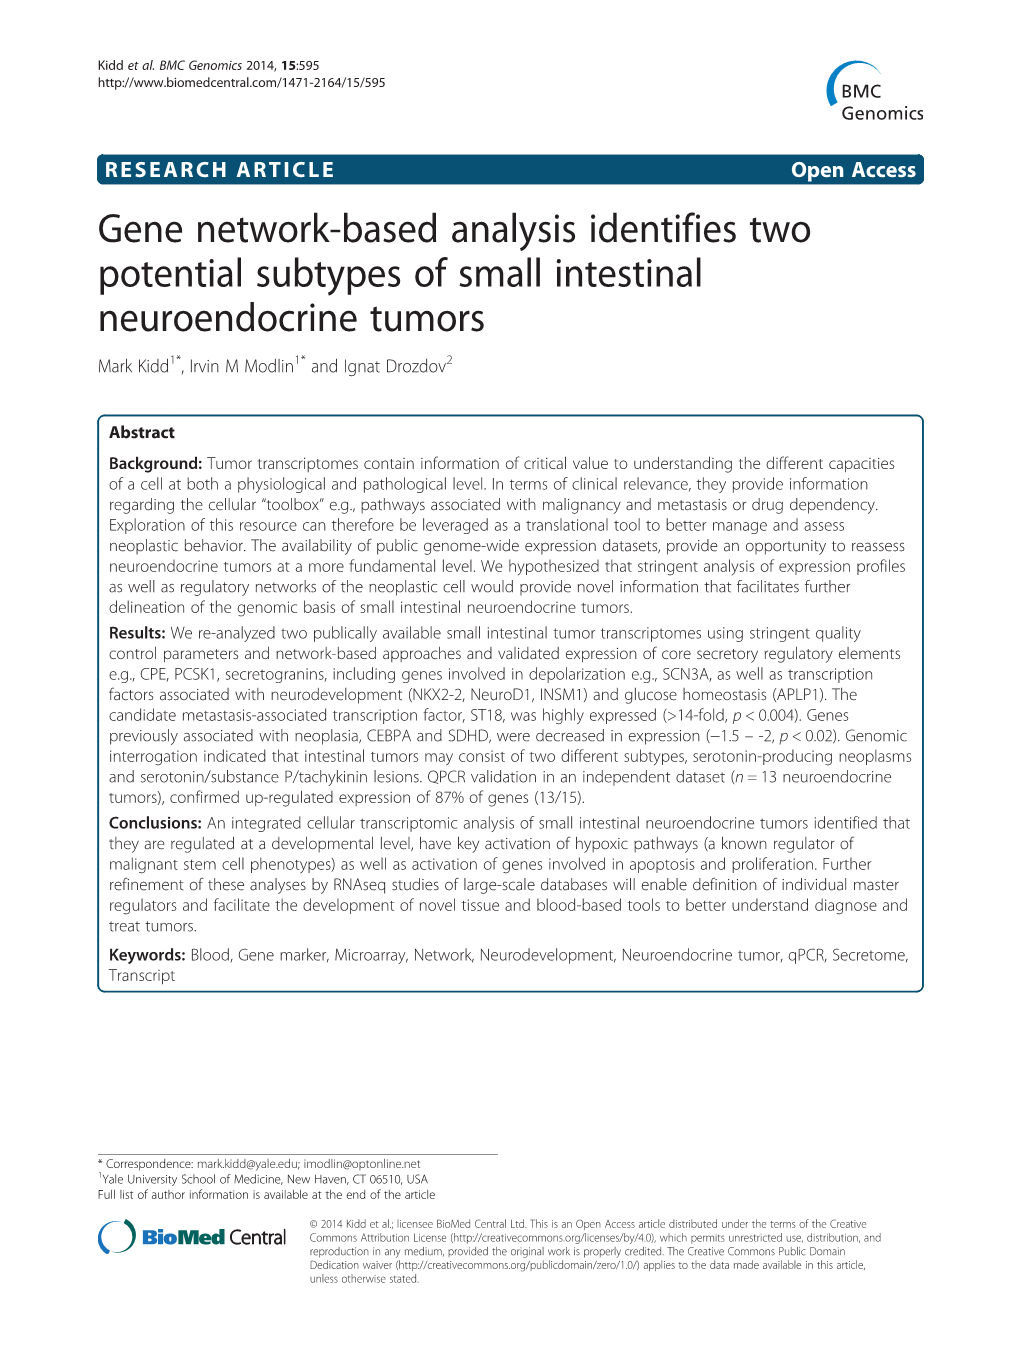 Gene Network-Based Analysis Identifies Two Potential Subtypes of Small Intestinal Neuroendocrine Tumors Mark Kidd1*, Irvin M Modlin1* and Ignat Drozdov2